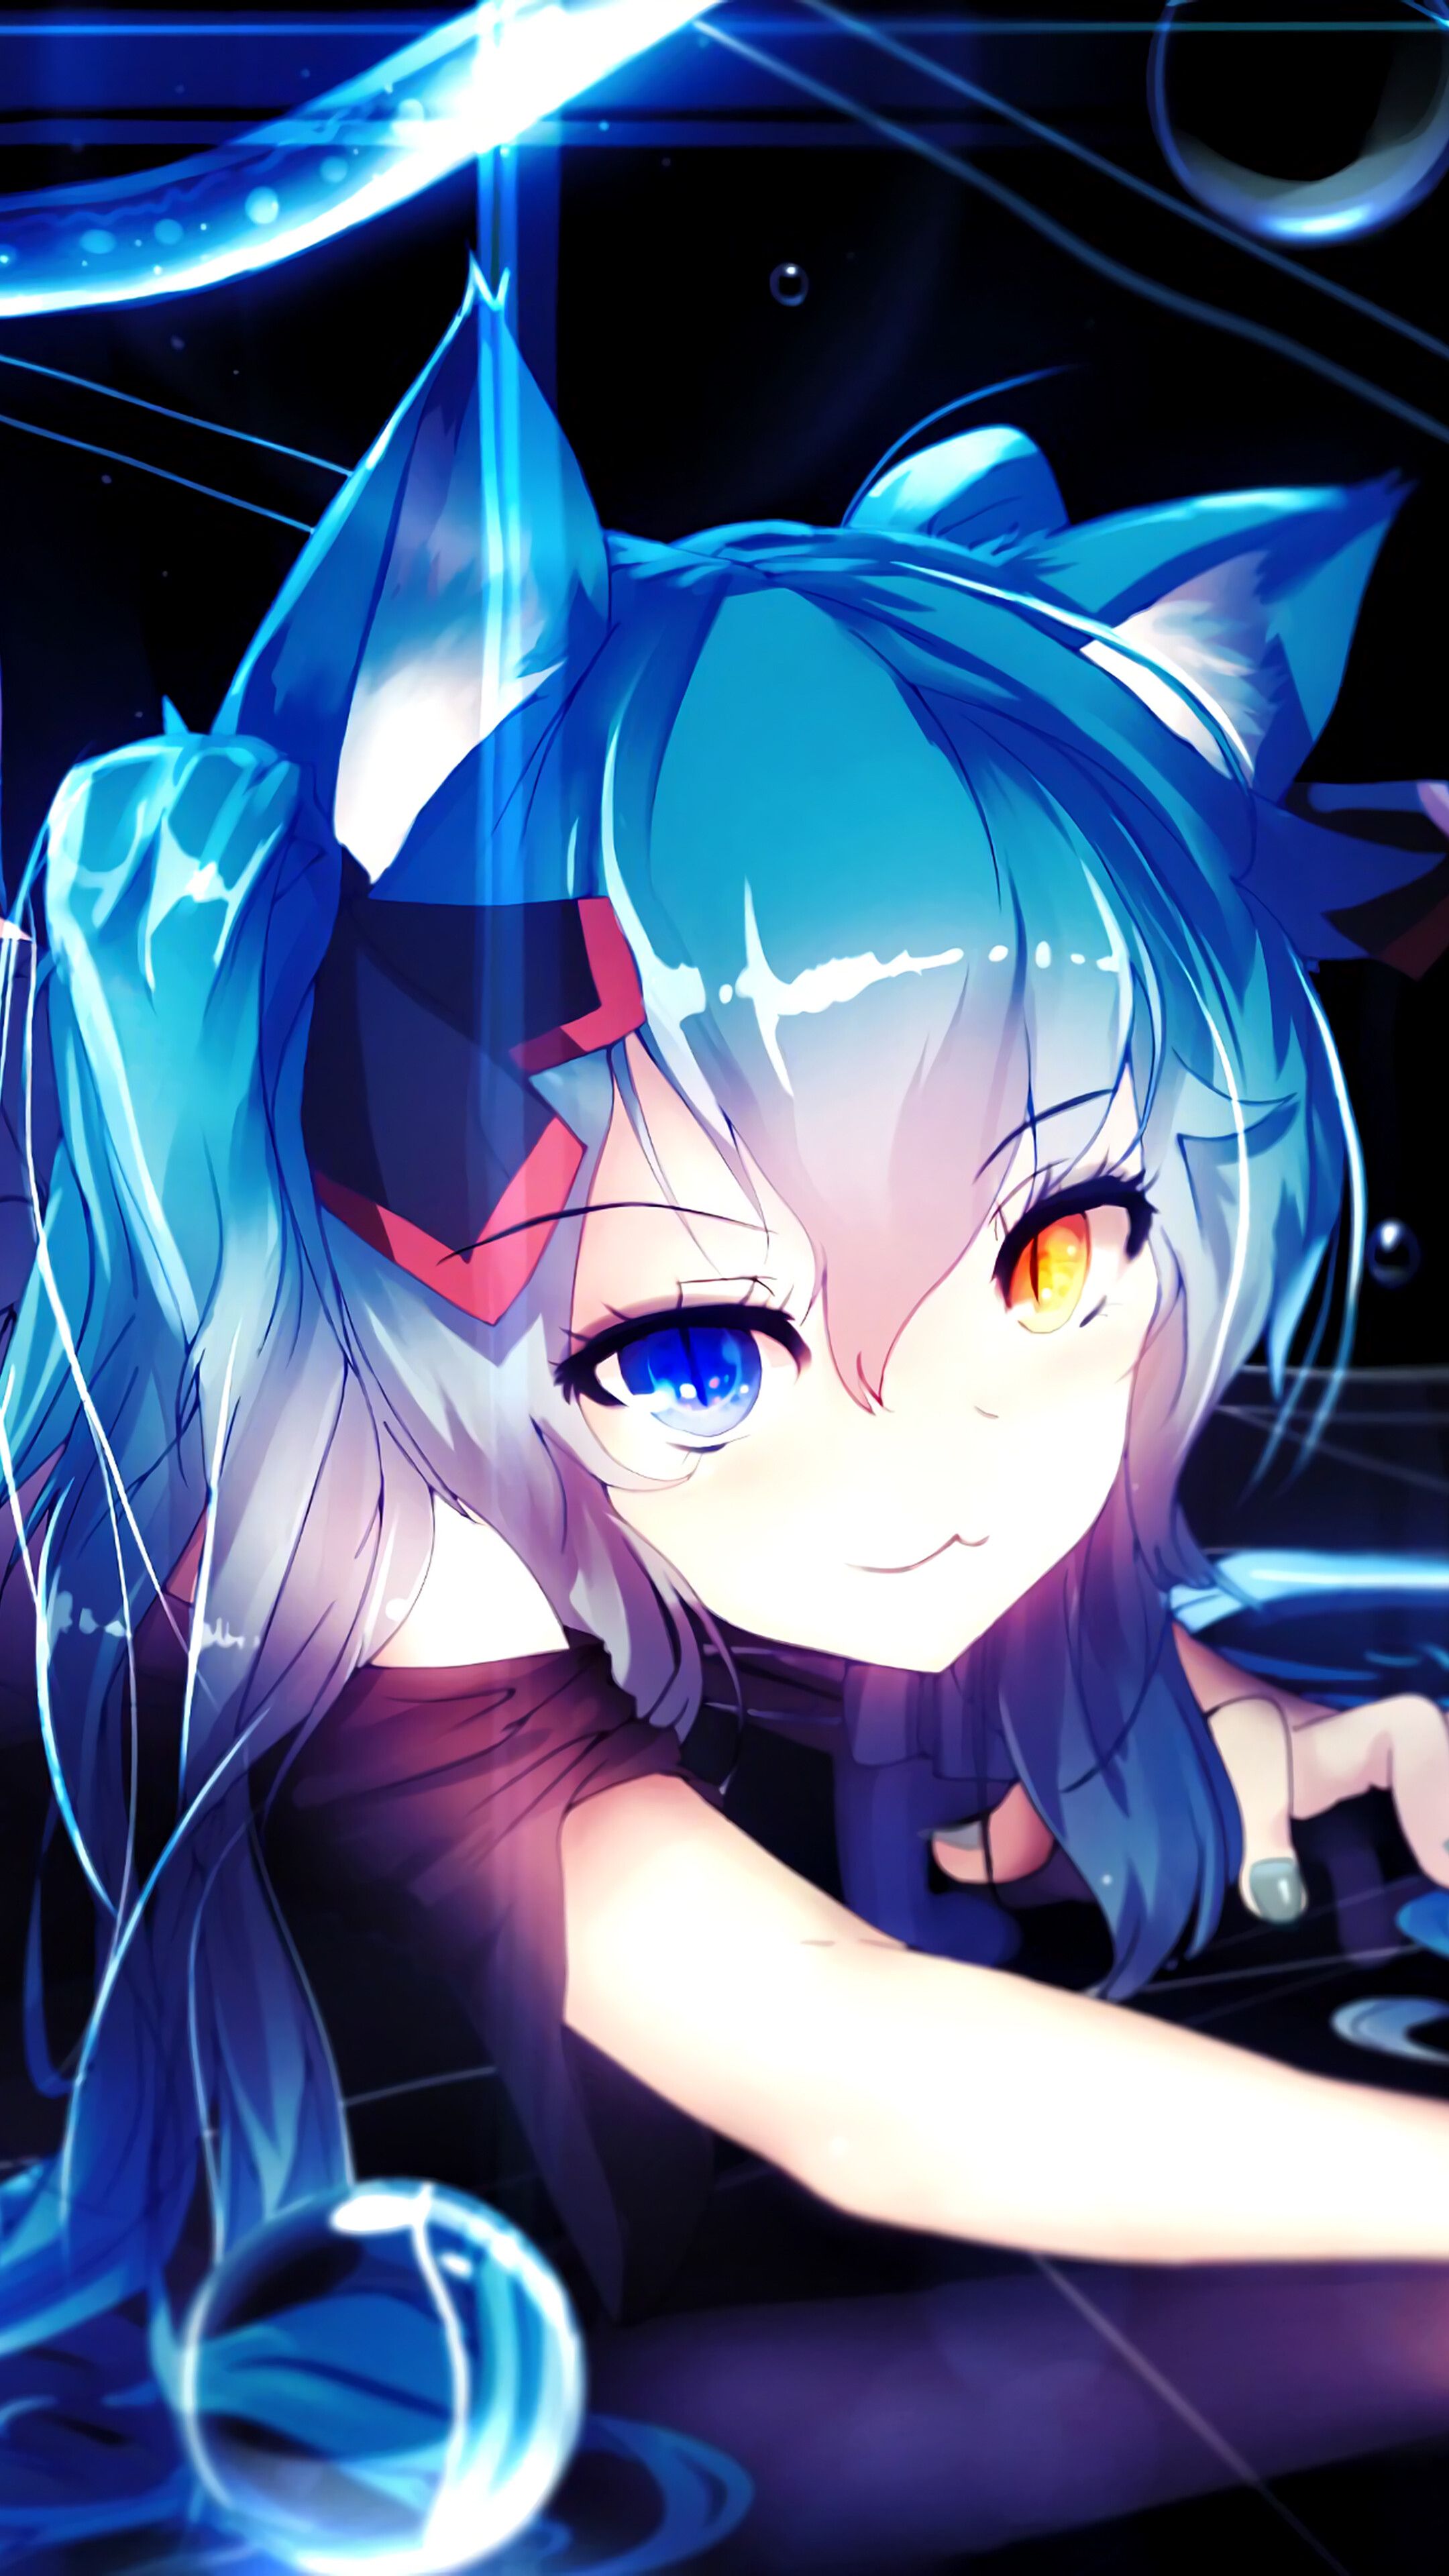 Anime, Neko Girl, Heterochromia, 4K phone HD Wallpaper, Image, Background, Photo and Picture